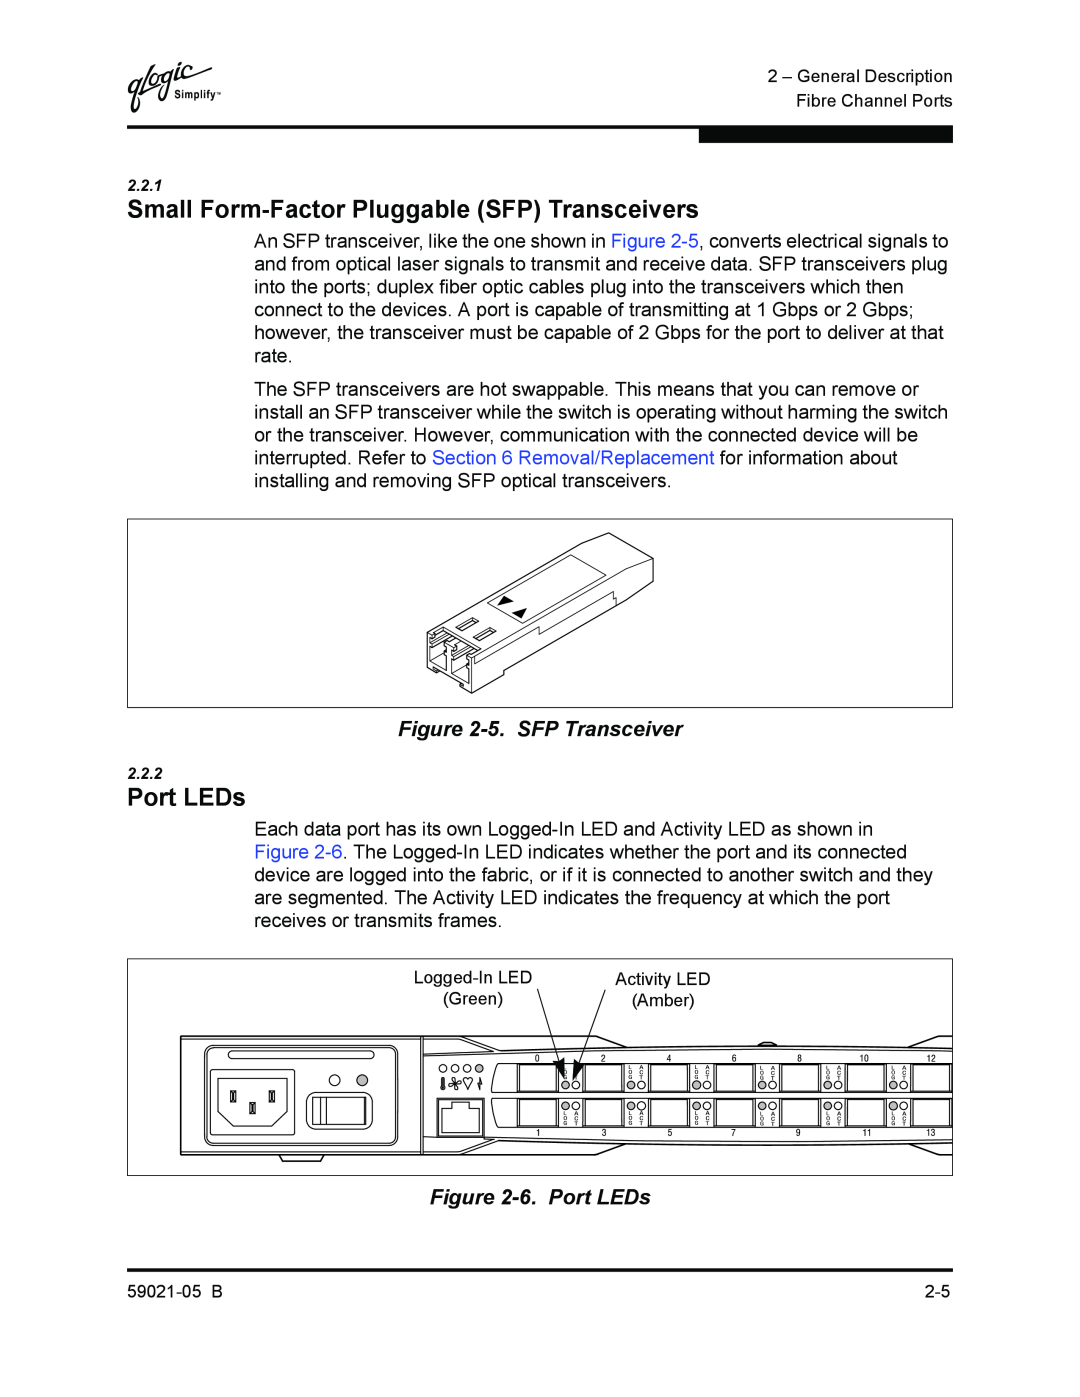 Q-Logic 59021-05 B manual Small Form-Factor Pluggable SFP Transceivers, 5. SFP Transceiver, 6. Port LEDs 